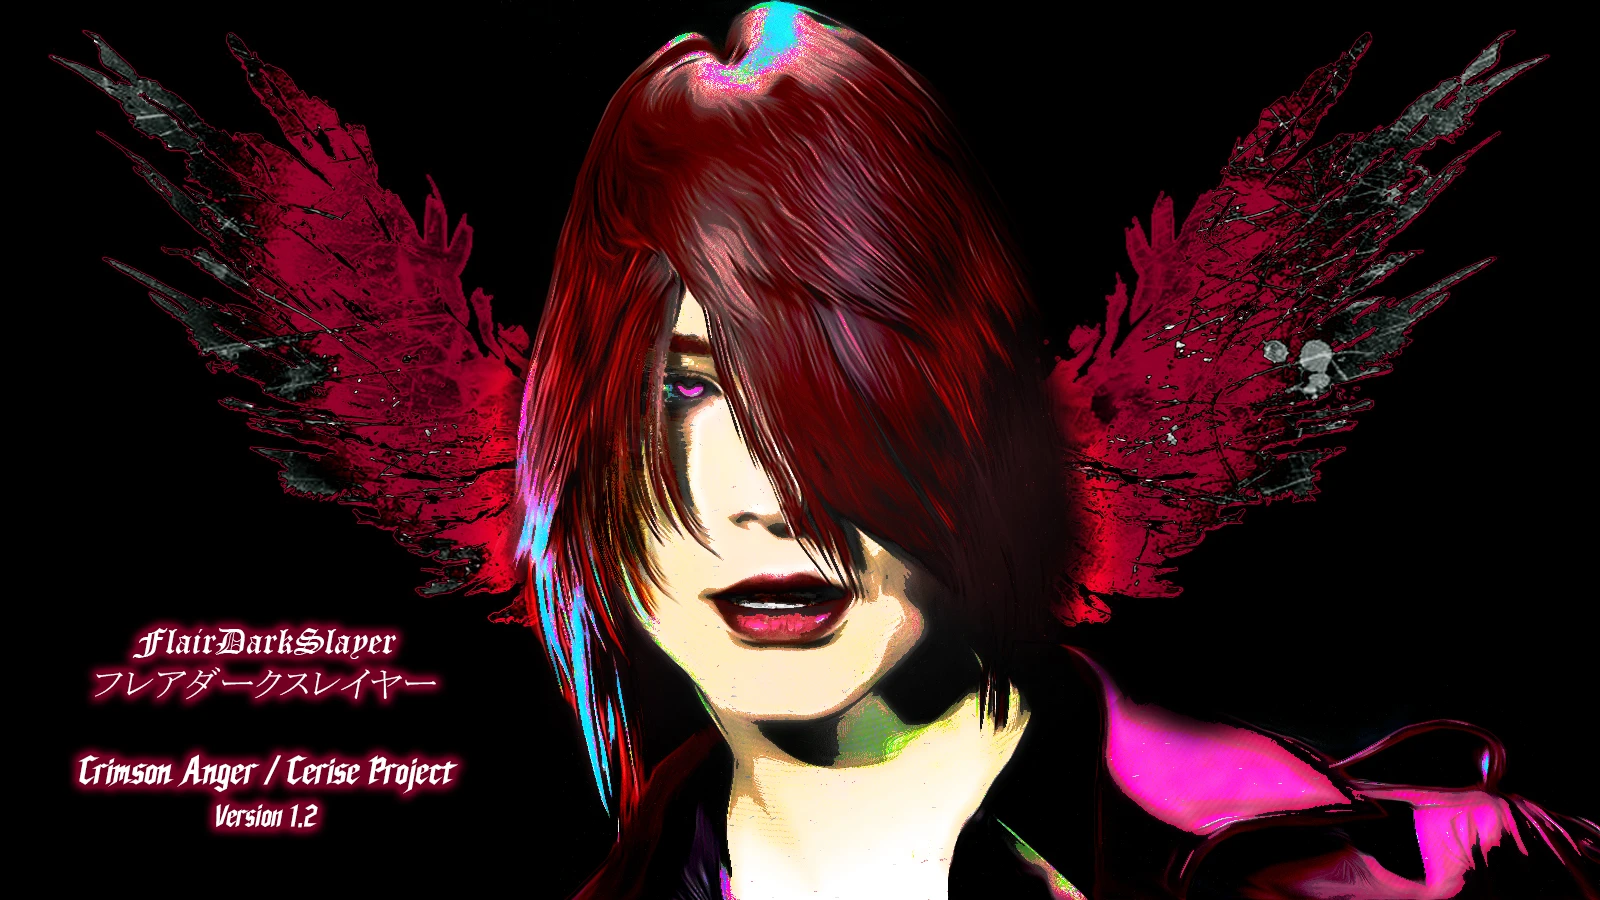 Dante Longer Hair & Dante Devil Trigger Dmc 2 - Devil May Cry 5 [MOD] 